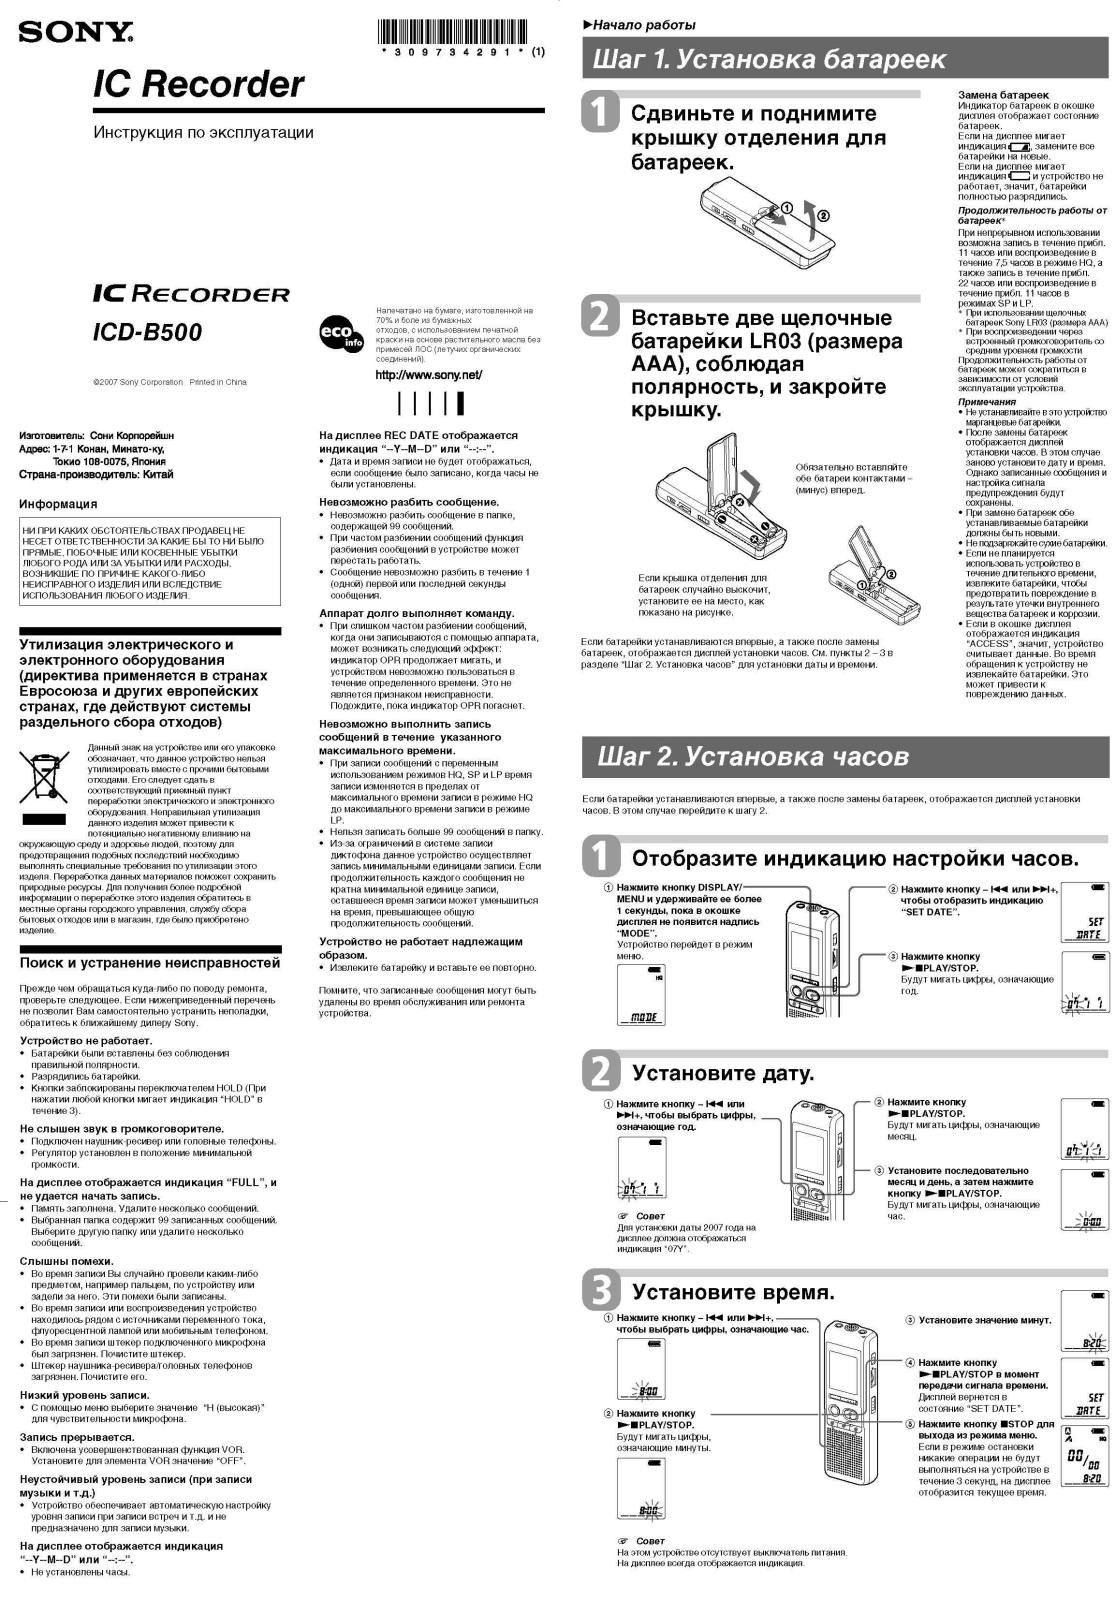 Sony ICD-B500 User Manual